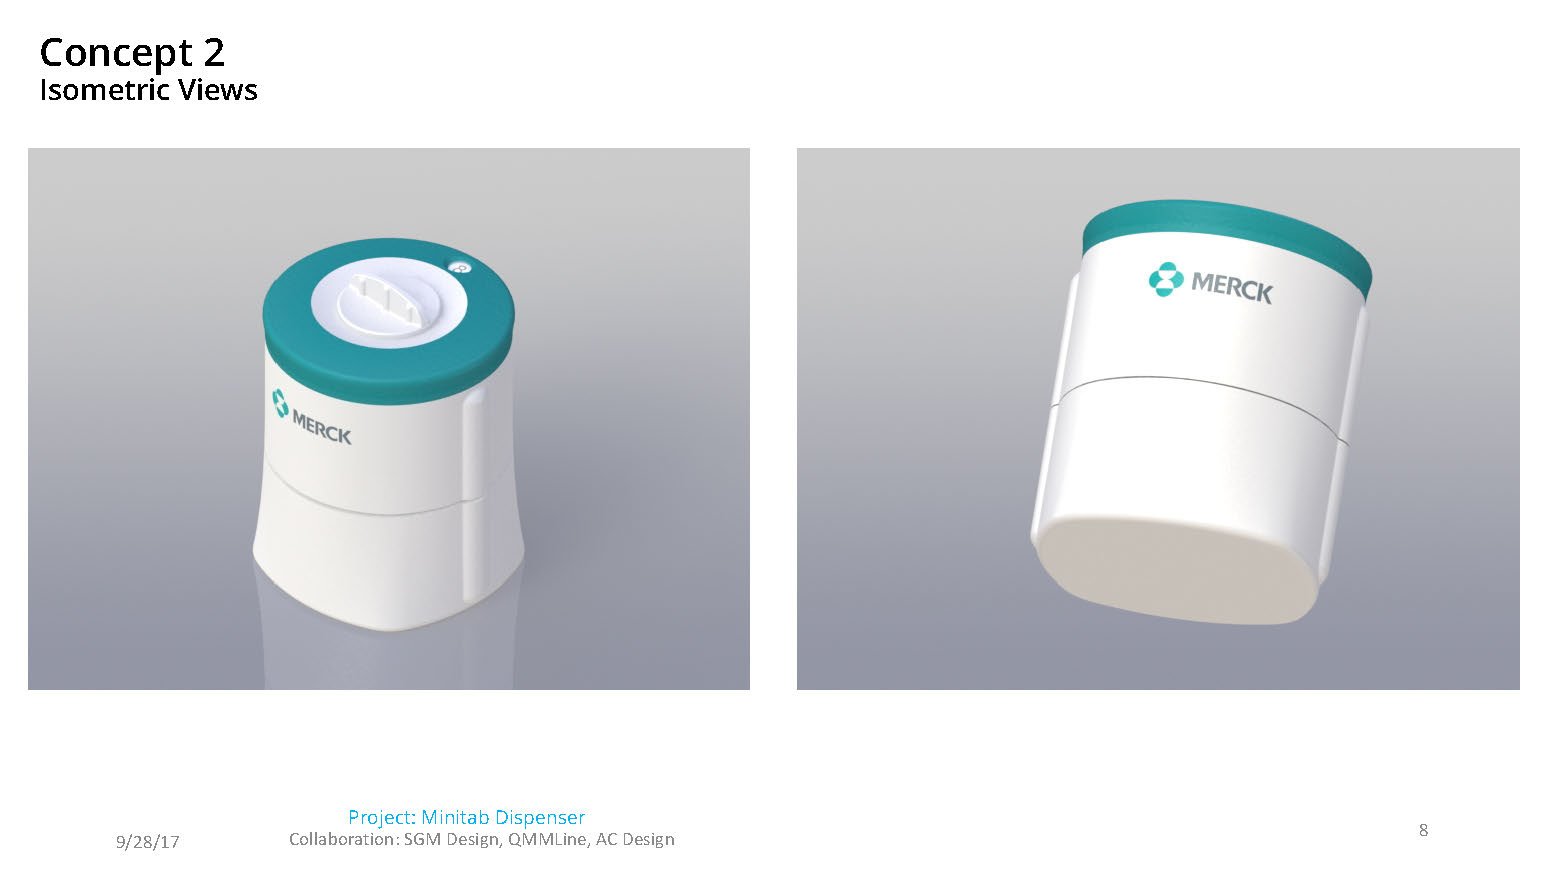 Minitab Dispenser Merck - Concept 1-5.REV_Page_08.jpg